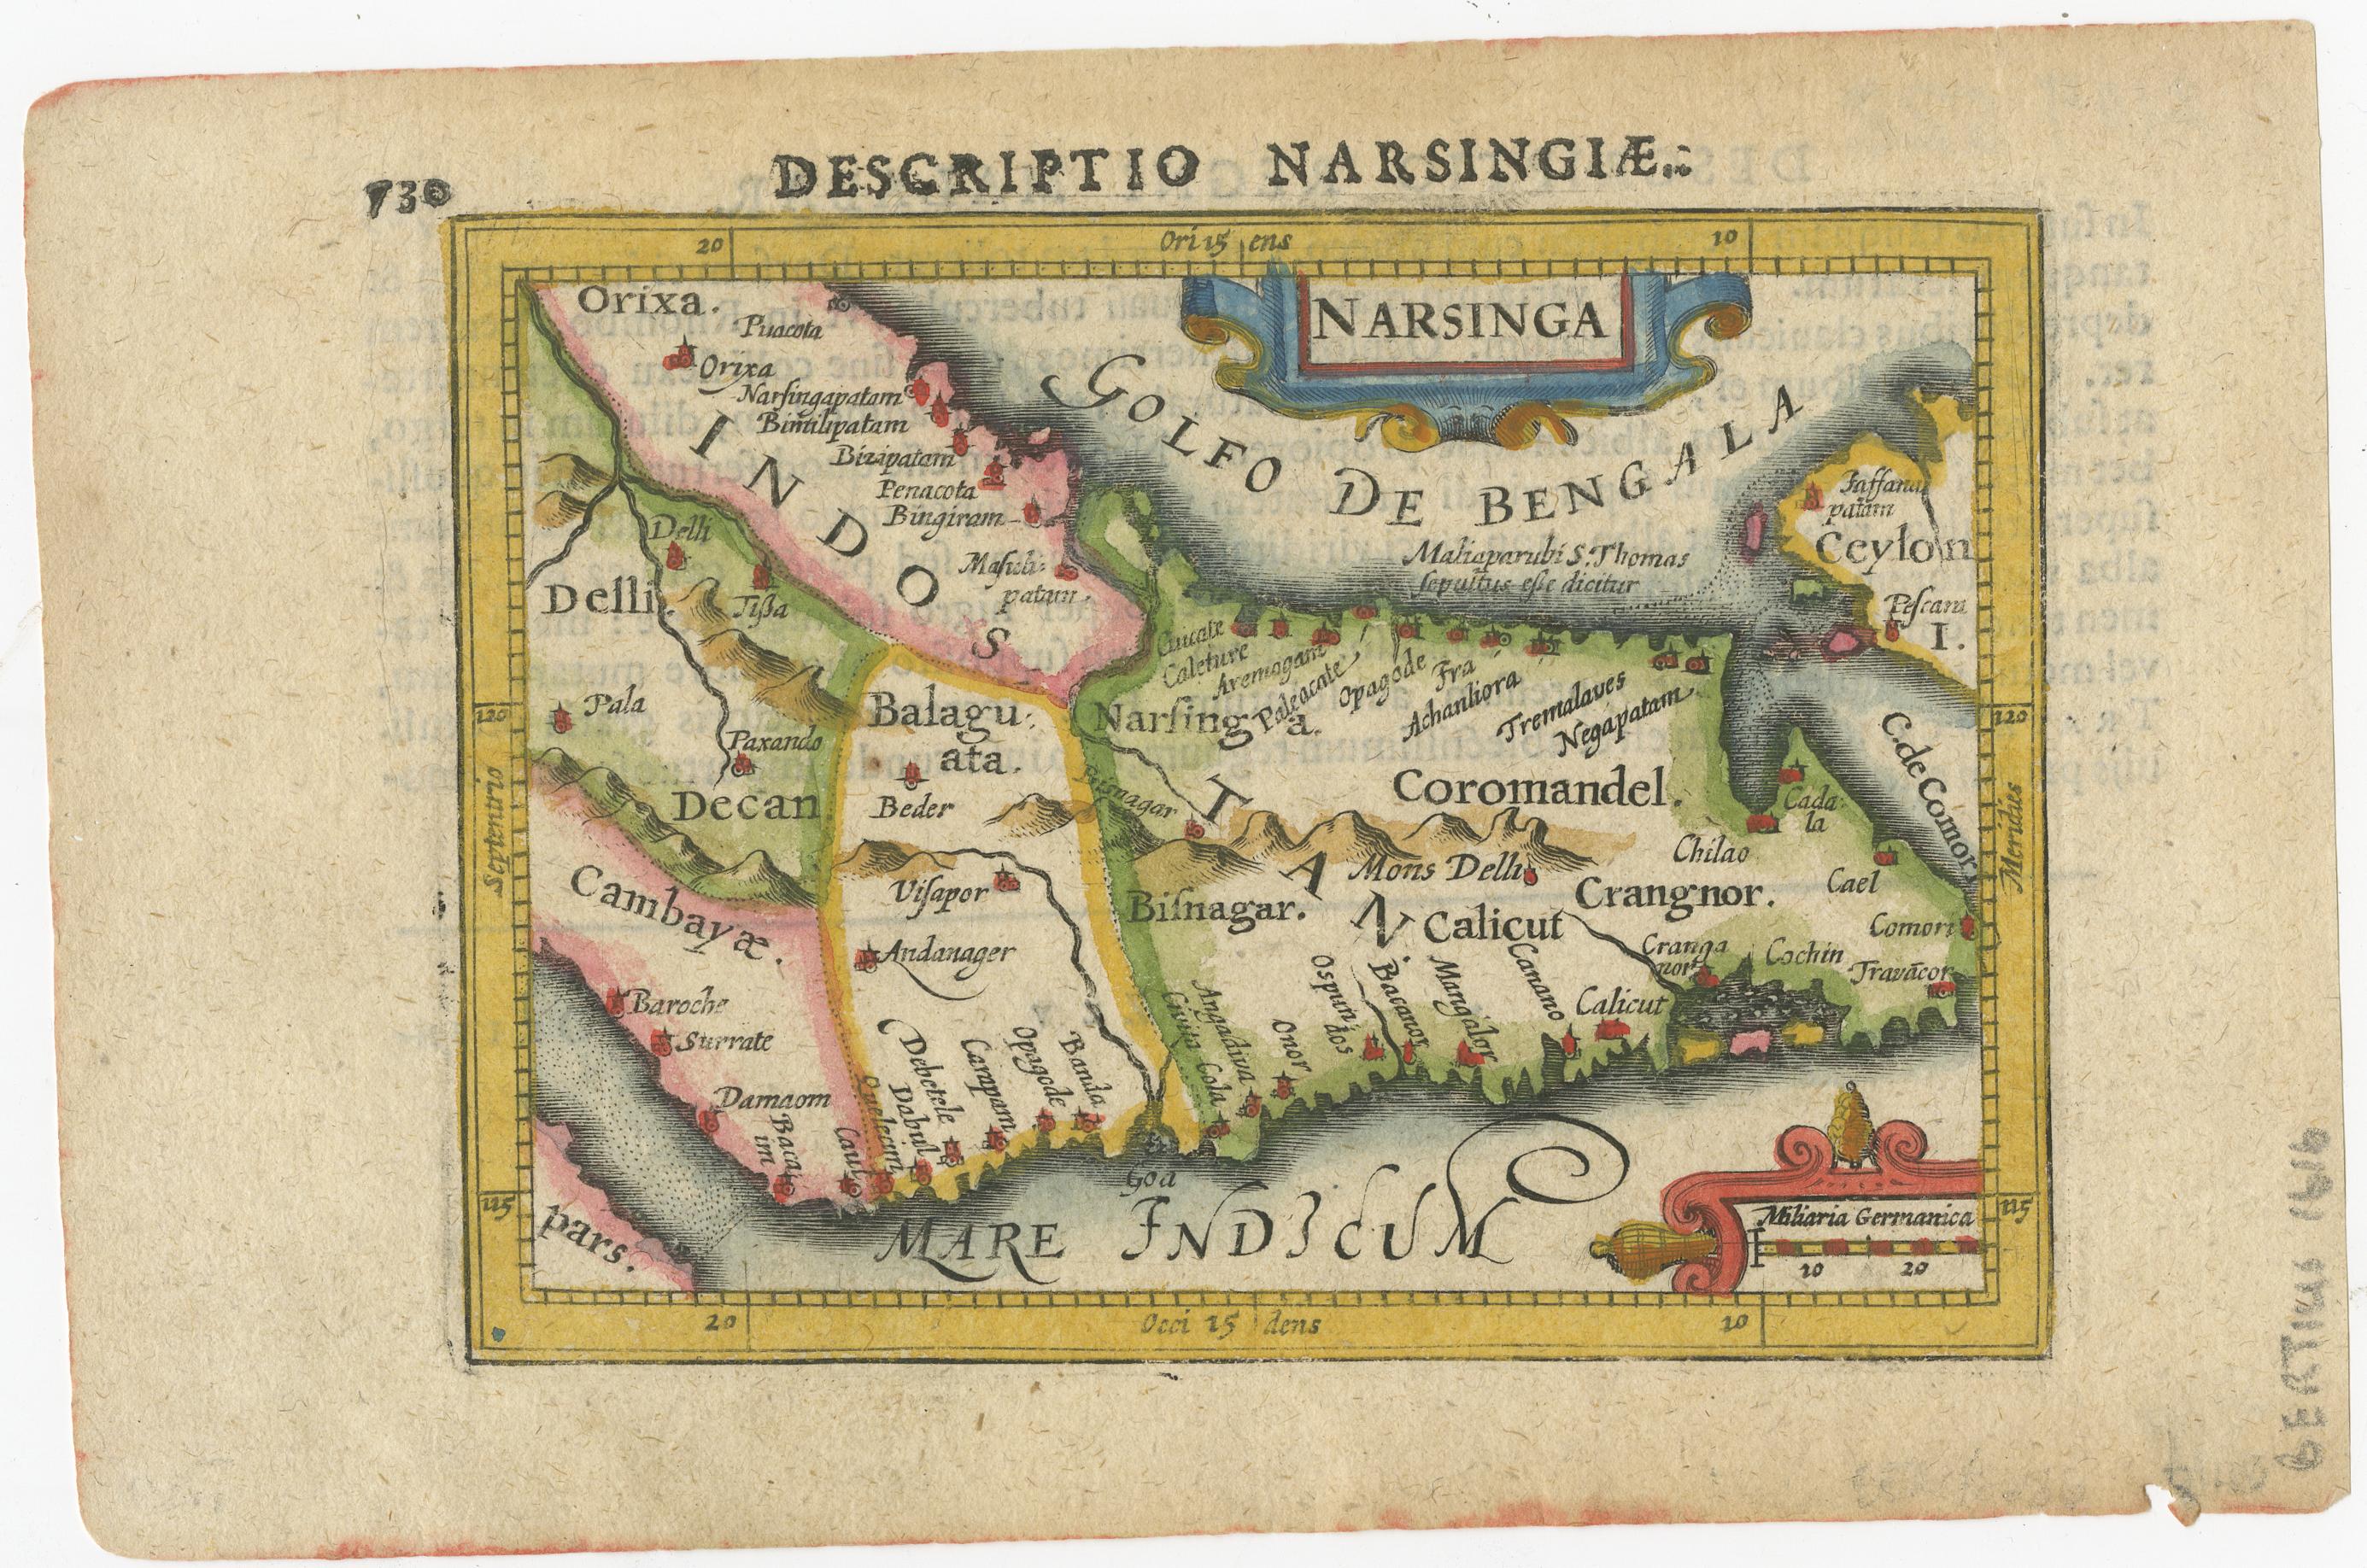 Old 17th century miniature antique map of India - Ceylon from the 1616 edition of Jadocus Hondius Atlas by Petrus Bertius. Original copperplate engraving with hand coloring.

Cartographer: Petrus Bertius ( 1565 - 1629) 
Bertius was also connected